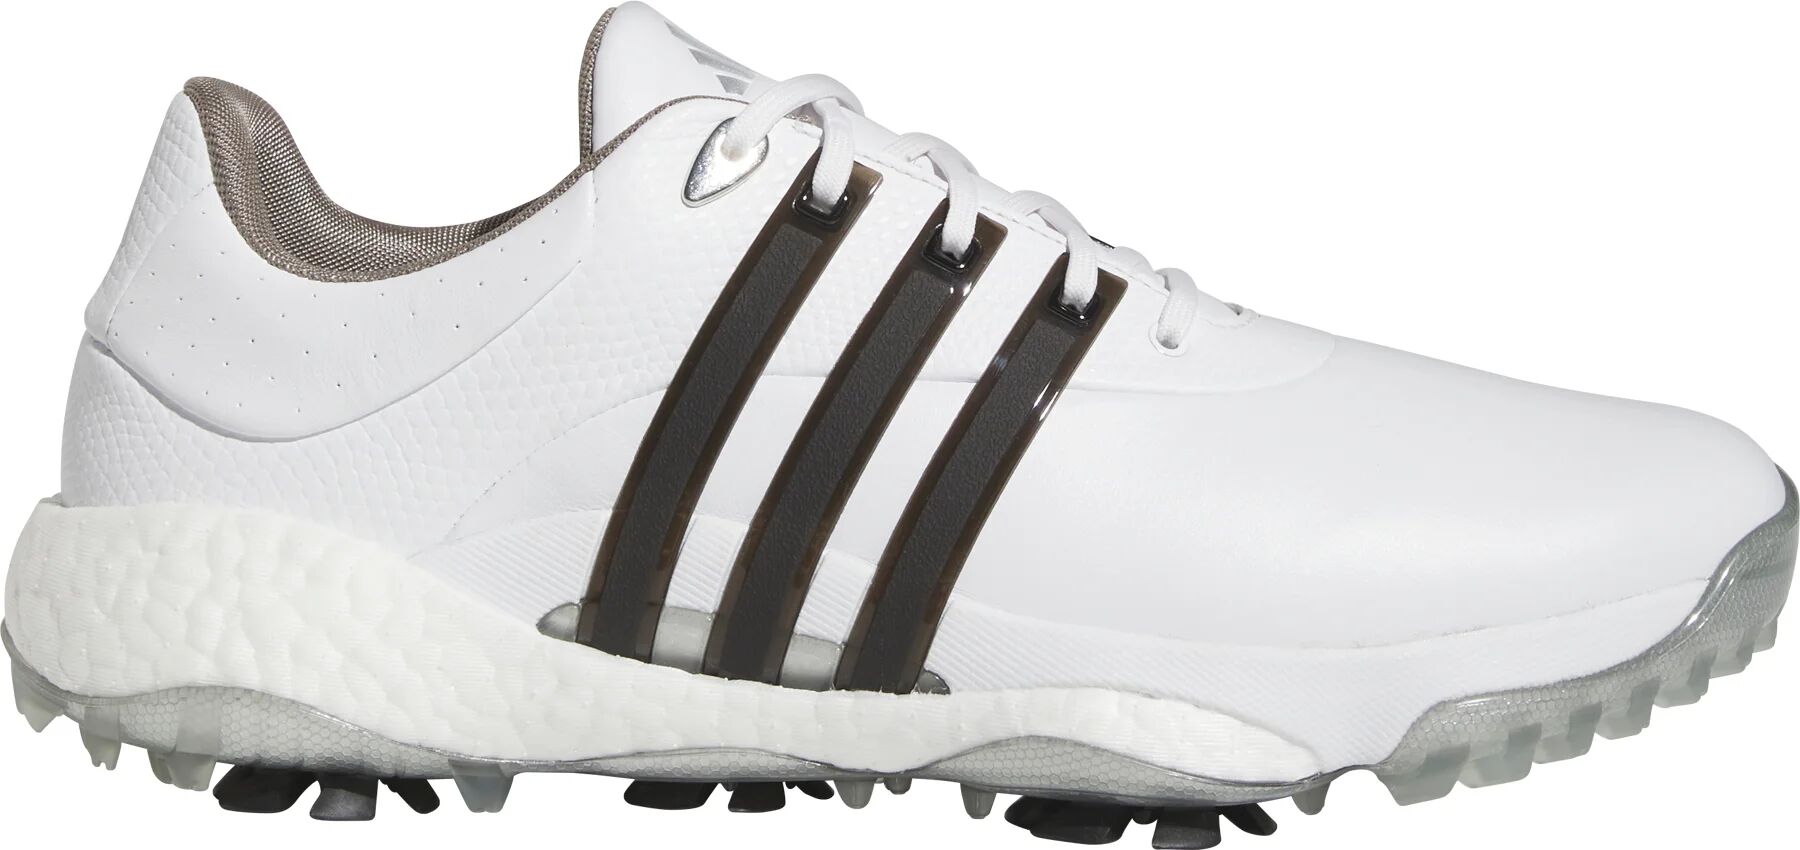 adidas Tour360 22 BOOST Golf Shoes - Cloud White/Core Black/Silver Metallic - 8.5 - MEDIUM